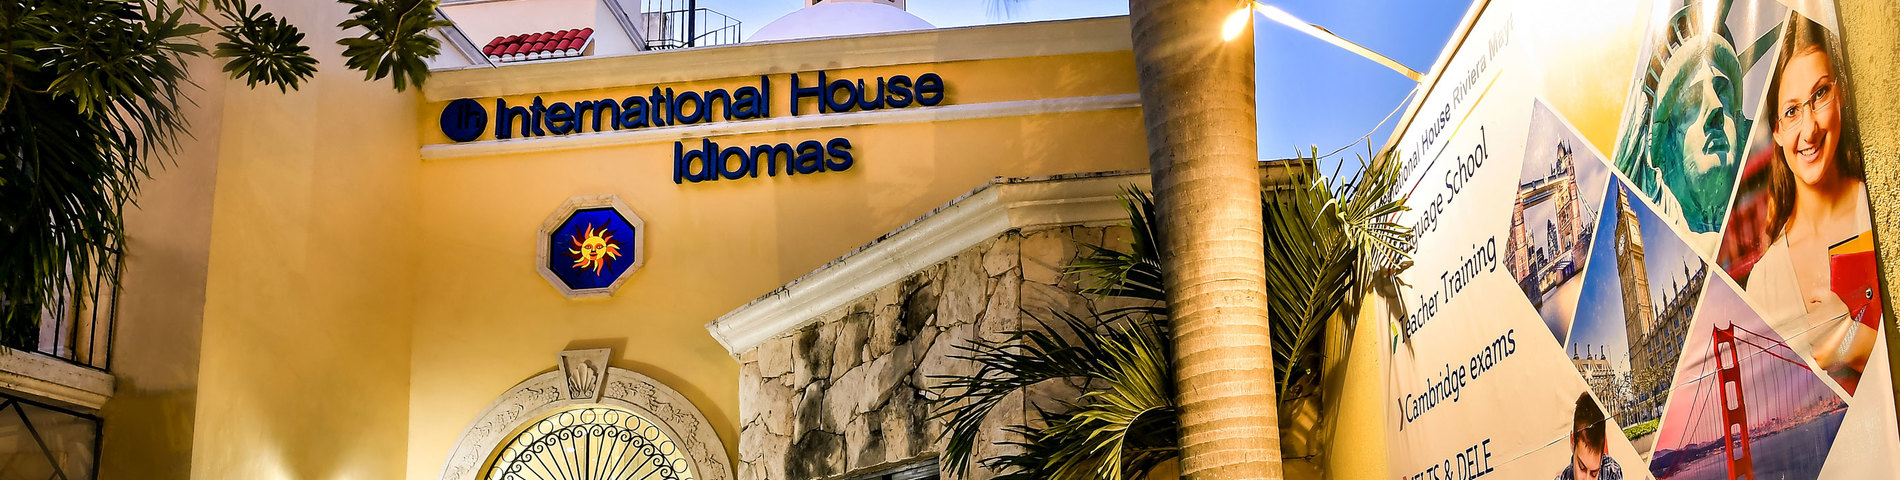 International House - Riviera Maya afbeelding 1